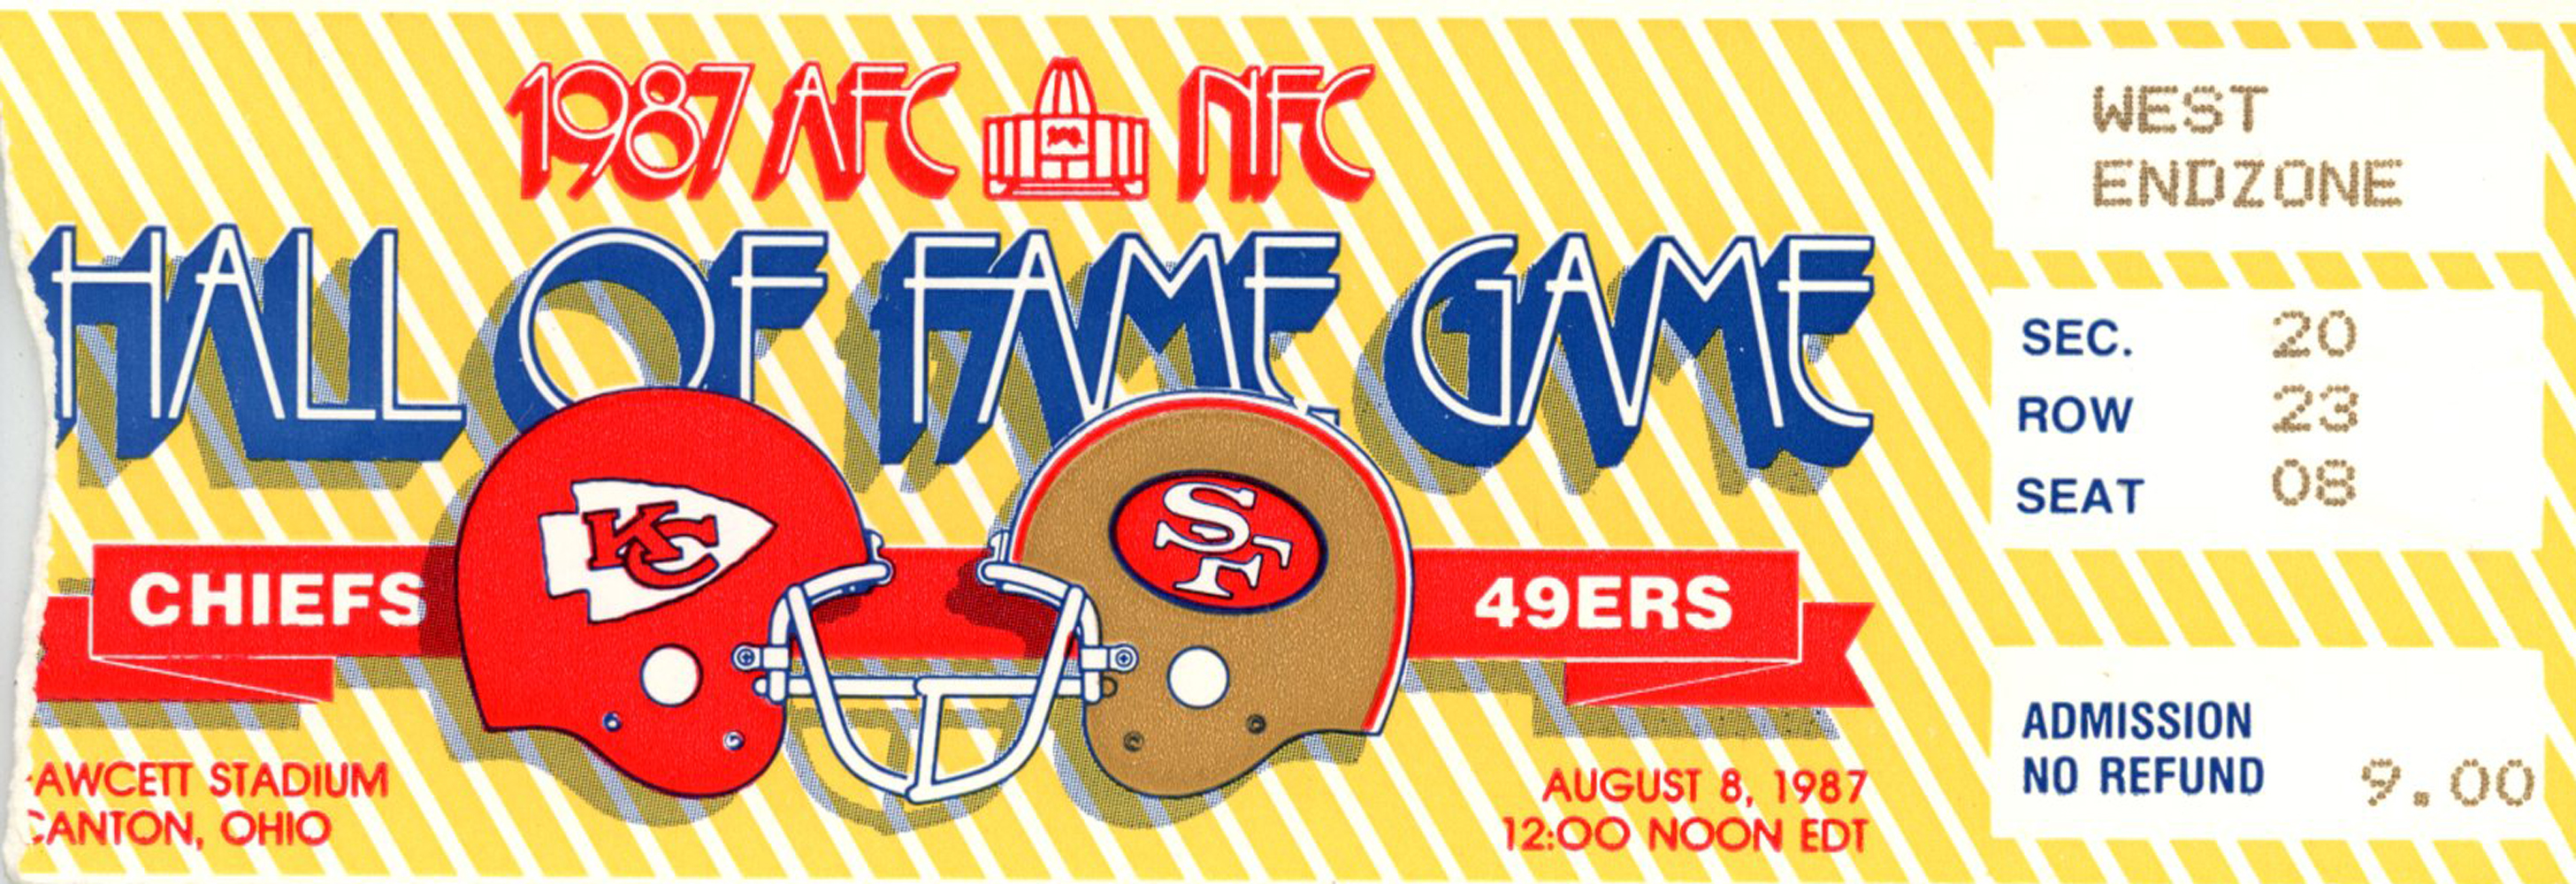 1987 Hall Of Fame Game Ticket Kansas City Chiefs vs San Francisco 49ers